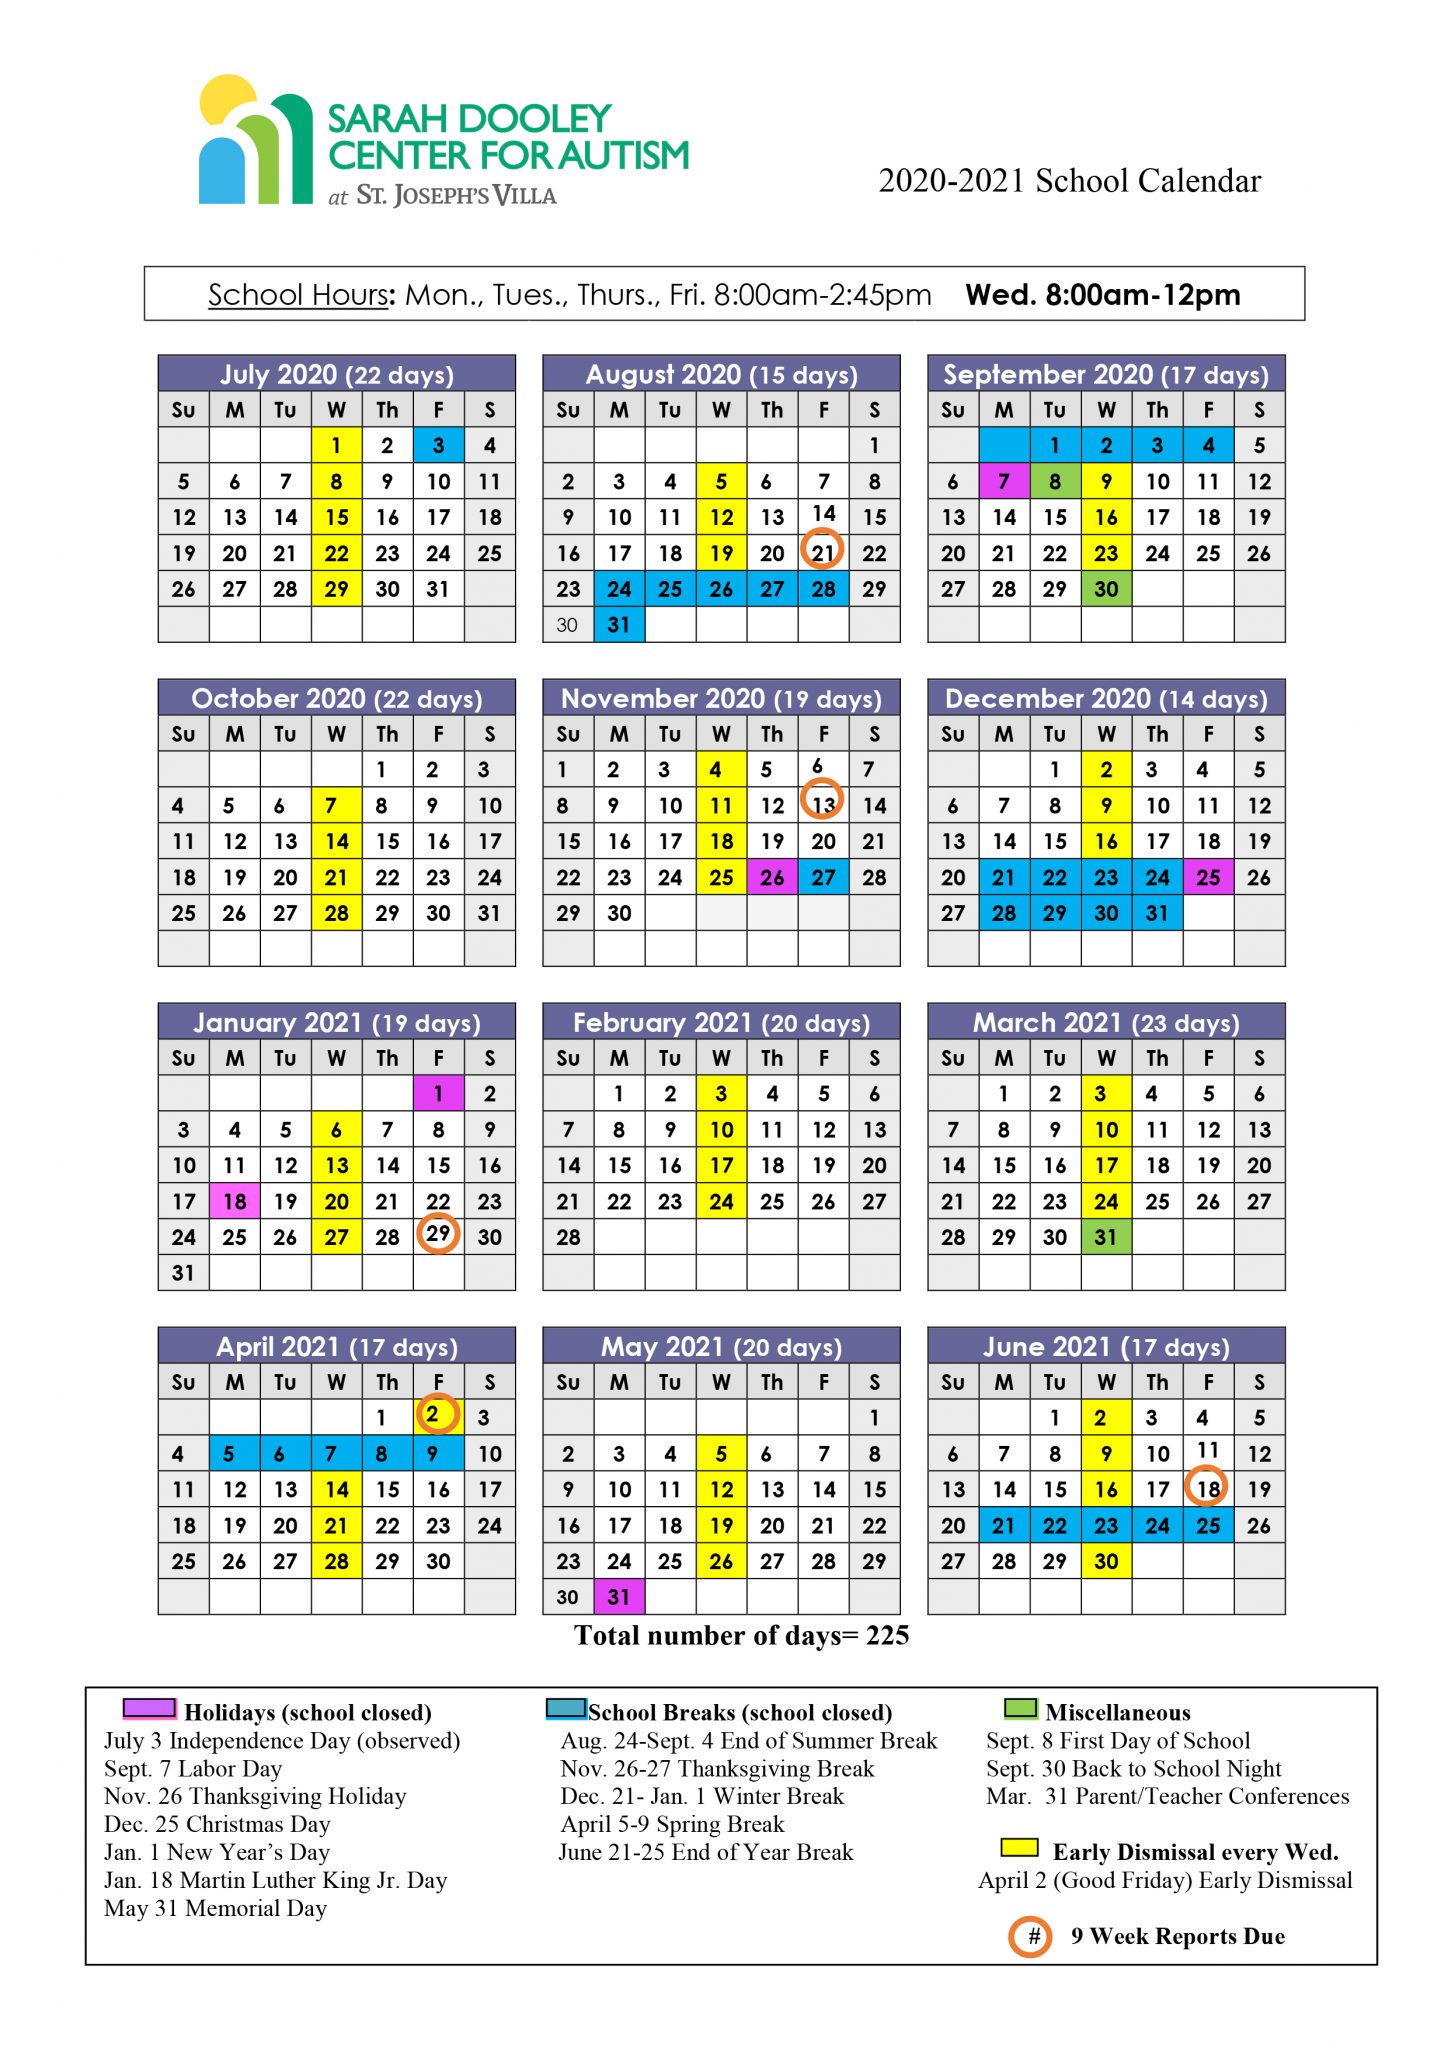 School Calendar | Sarah Dooley Center for Autism | Richmond VA